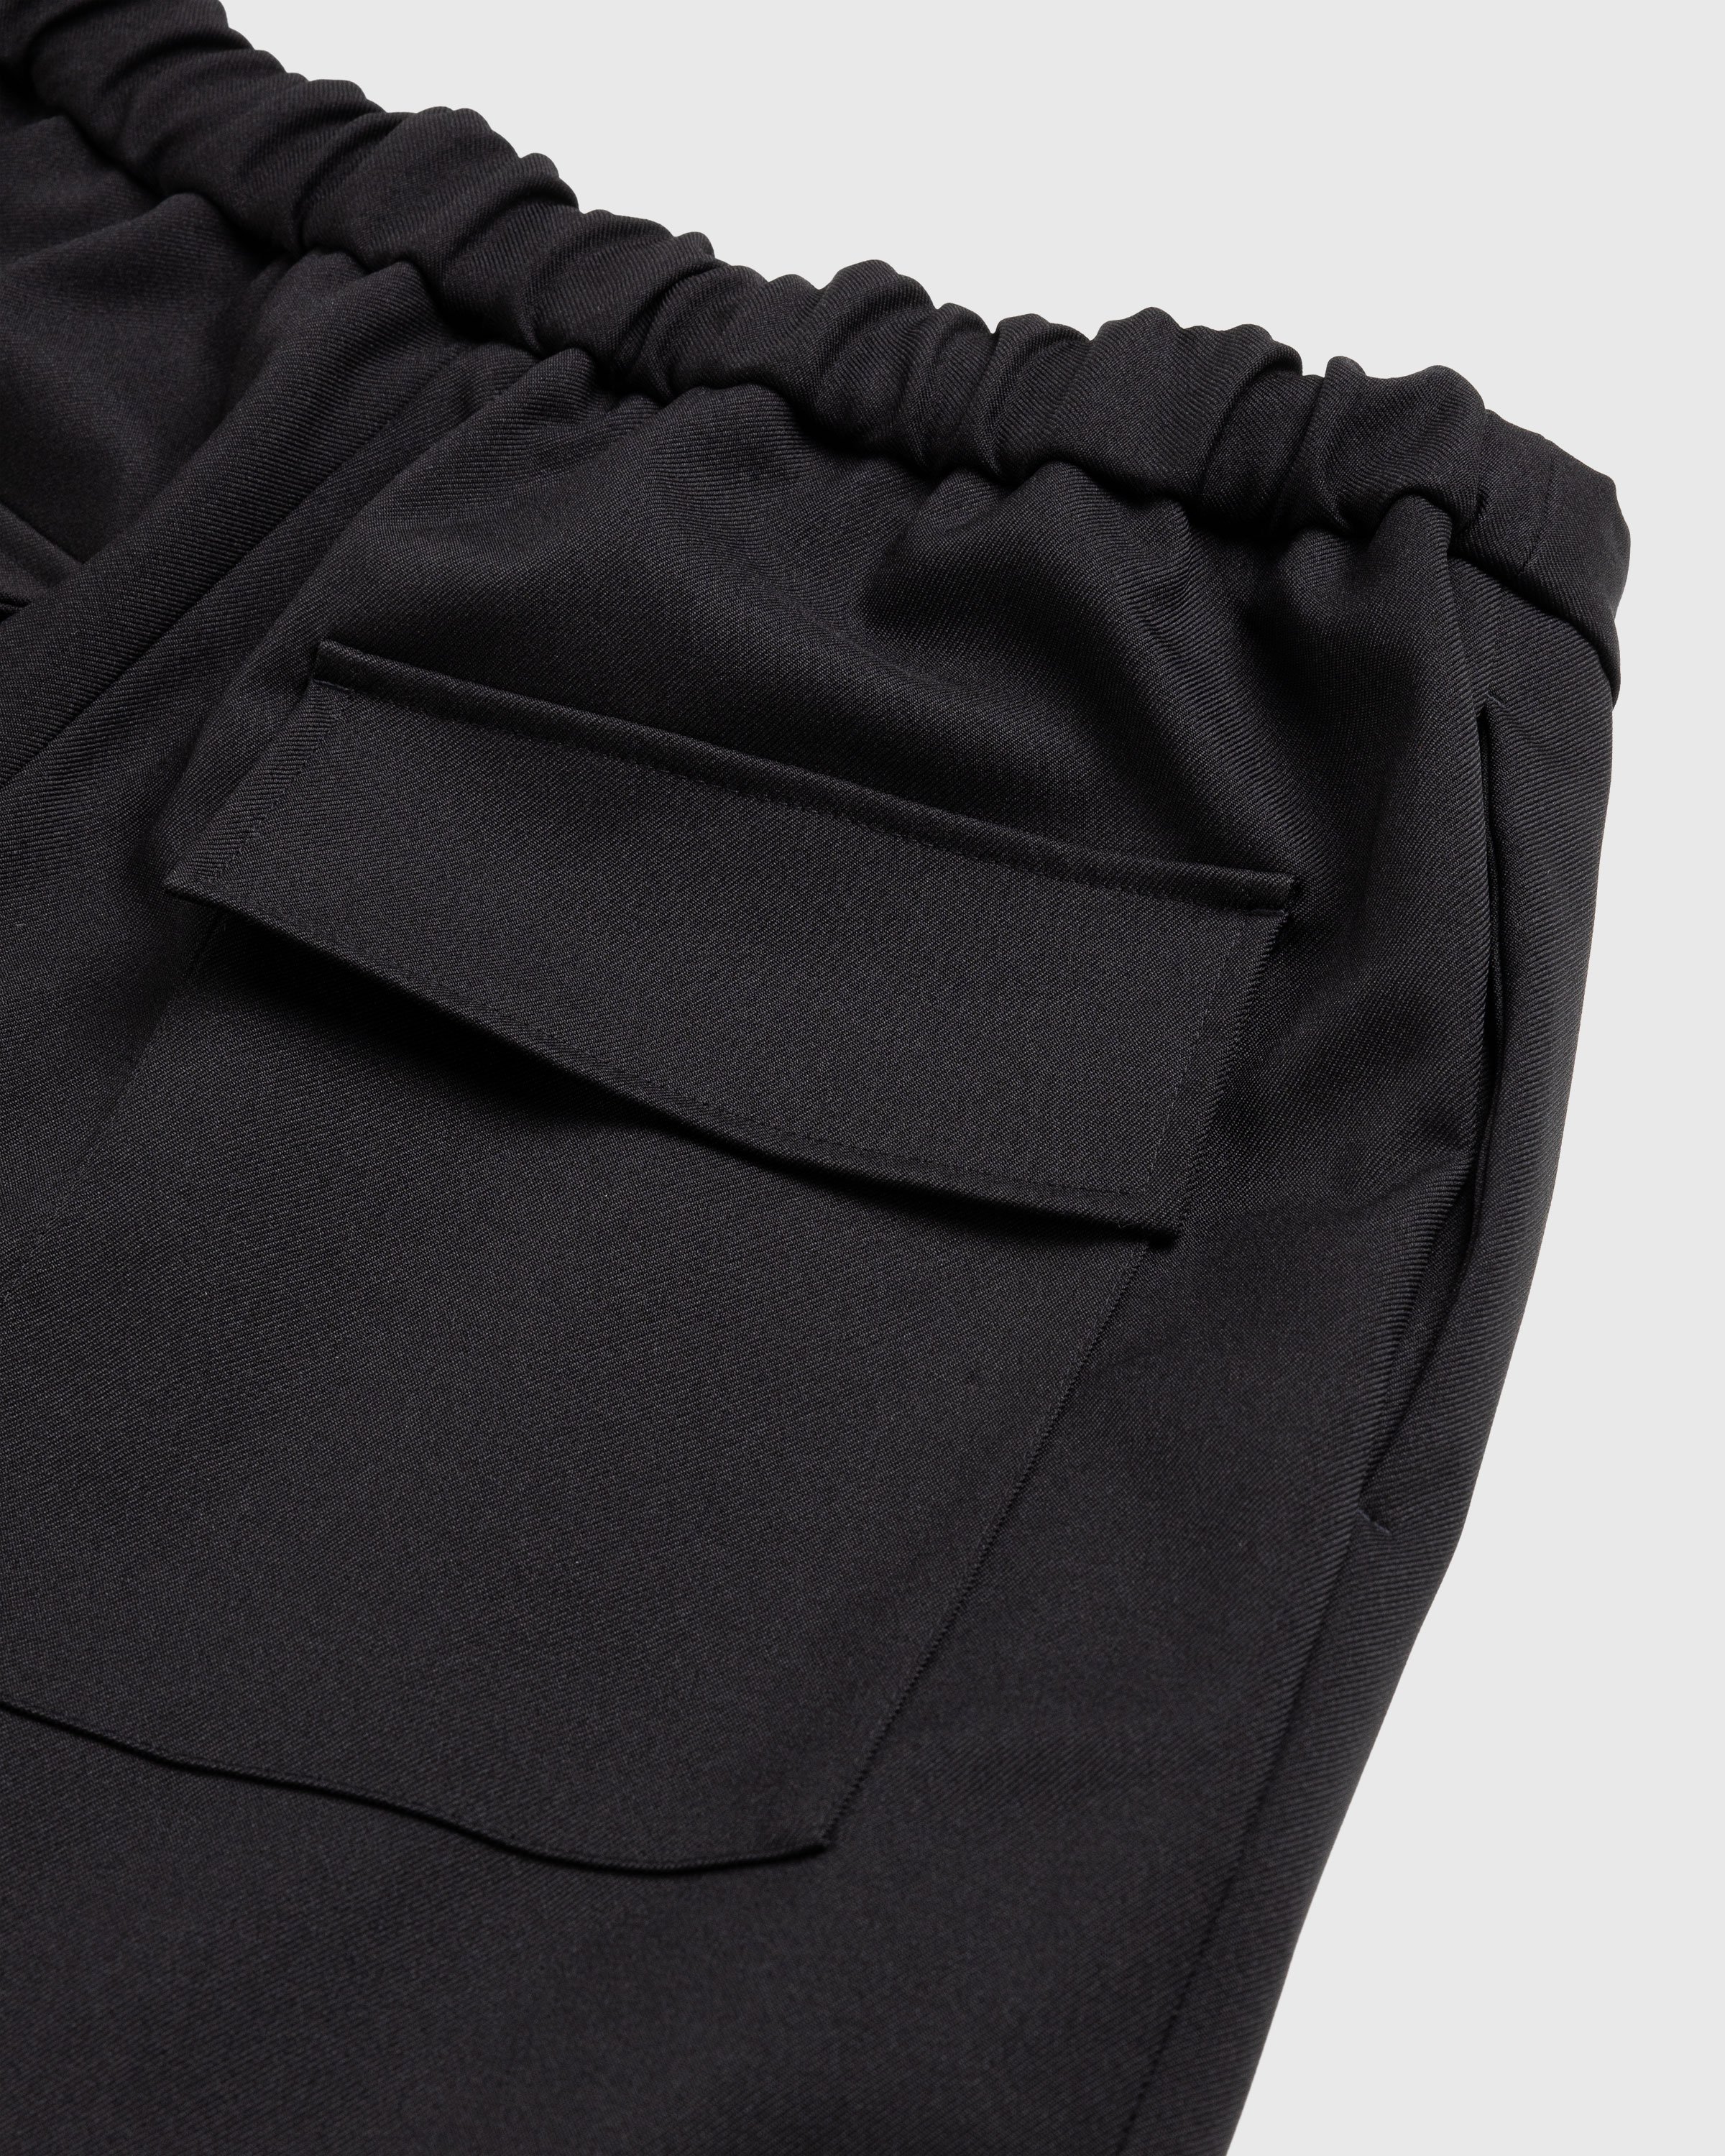 Jil Sander - Trouser D 09 AW 20 - Clothing - Black - Image 4